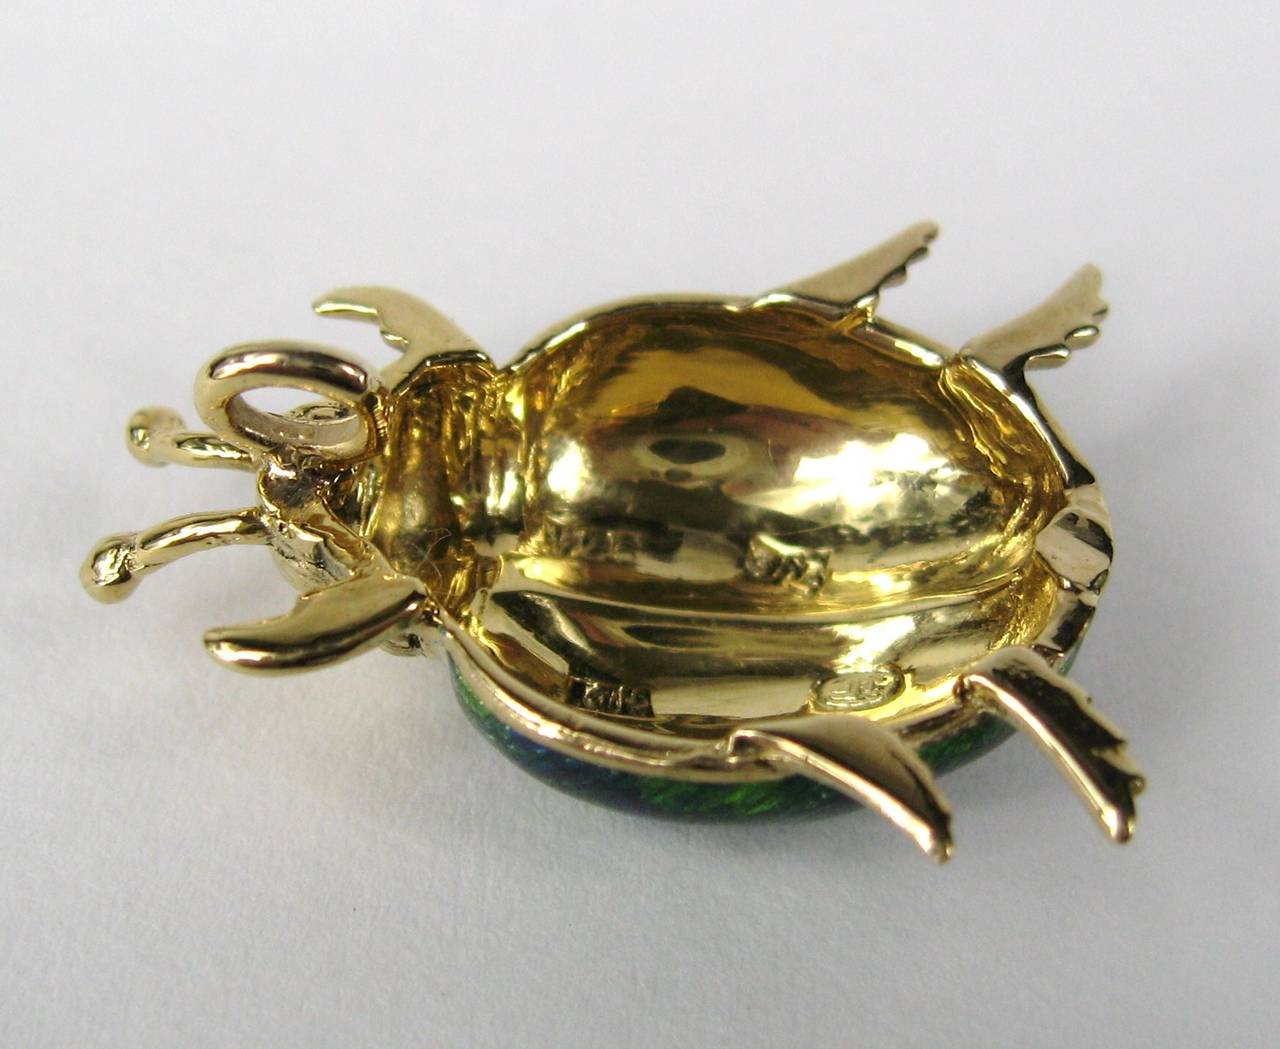  Pendentif en forme de scarabée en or et émail bleu vert  Bon état - En vente à Wallkill, NY